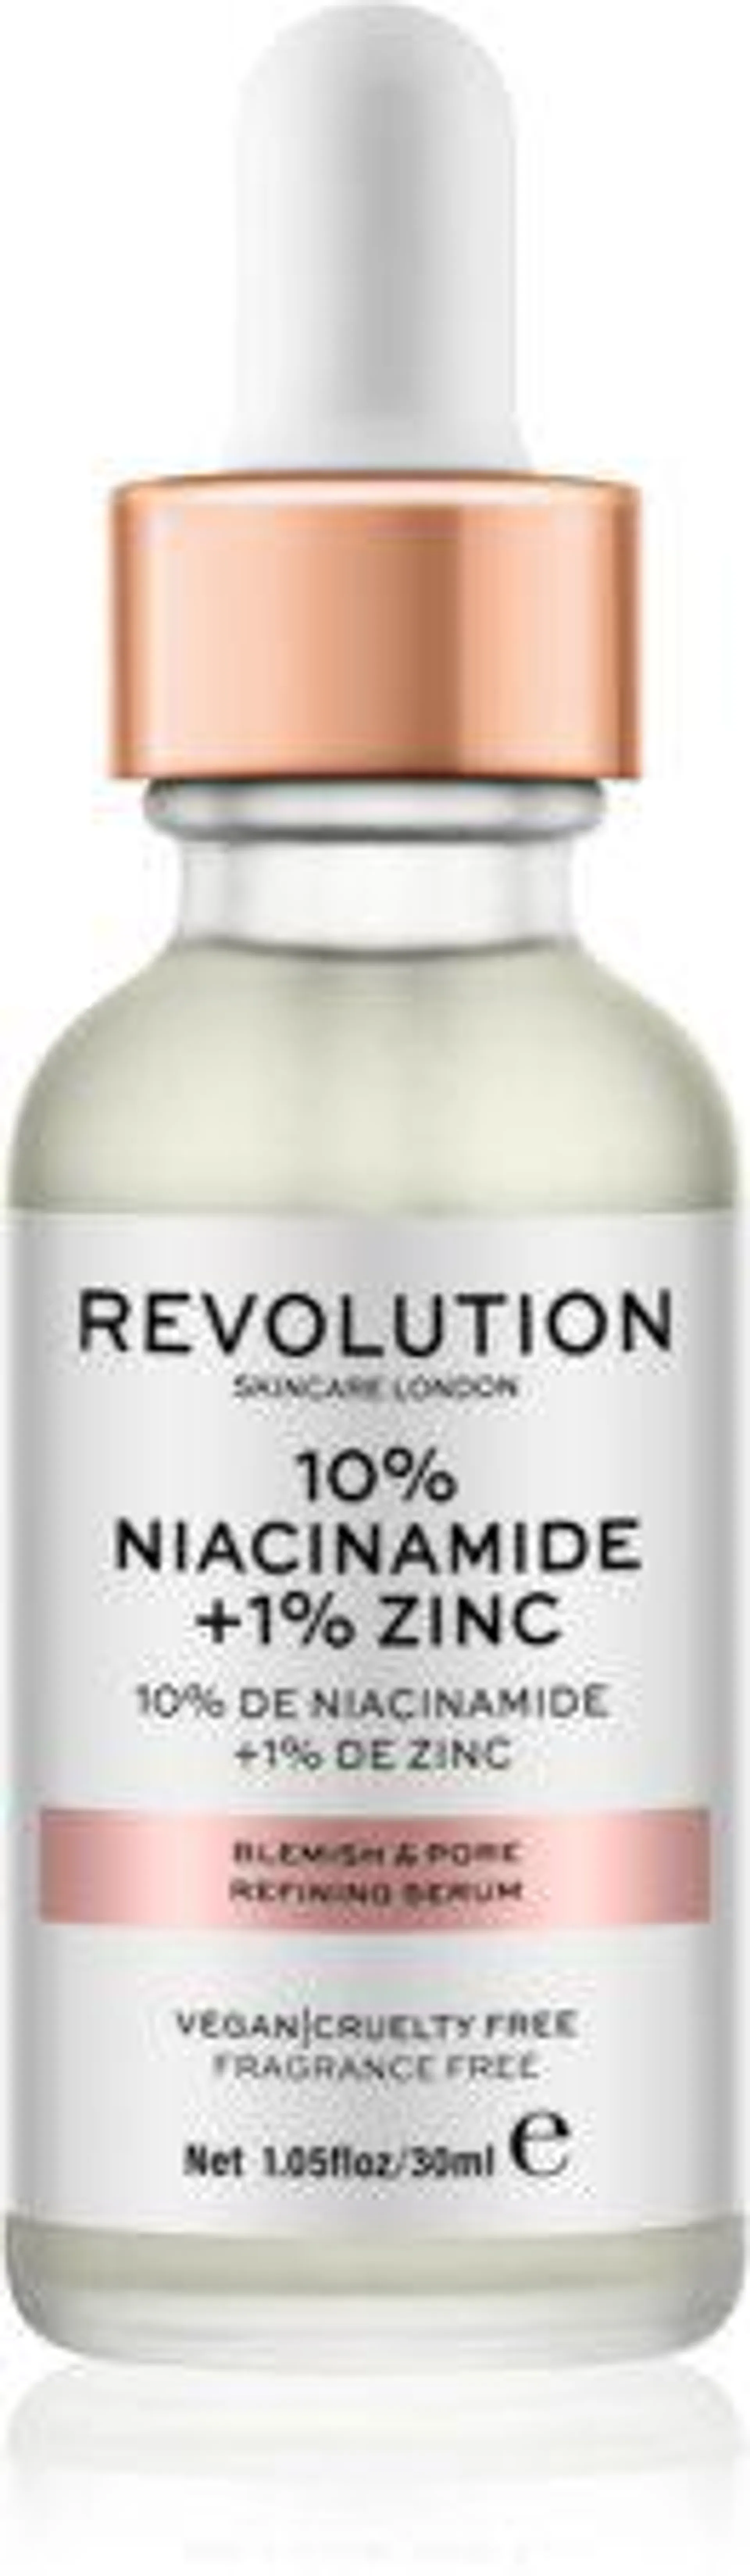 Niacinamide 10% + Zinc 1%